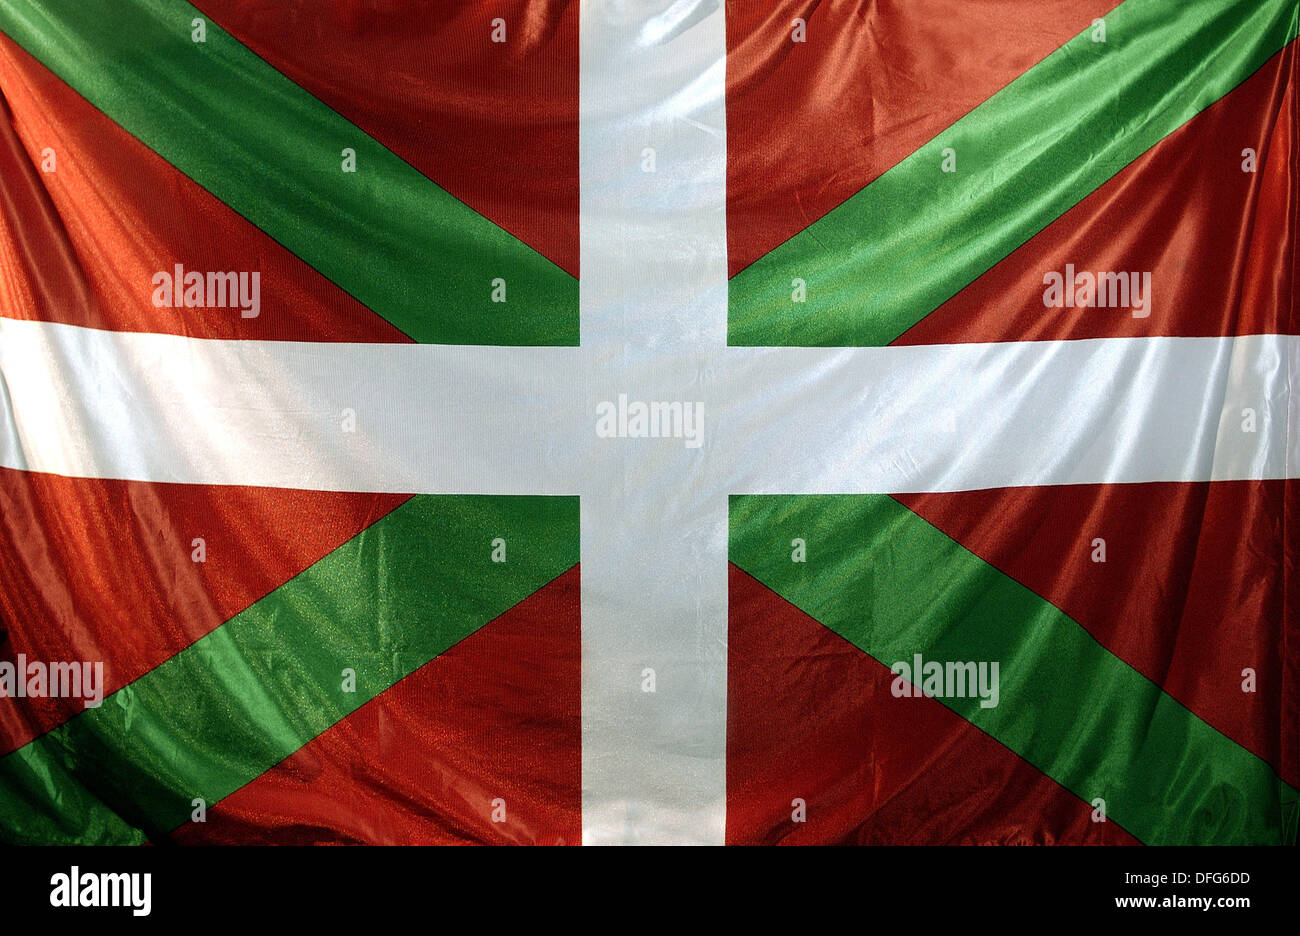 Ikurriña´, Basque country flag Stock Photo - Alamy